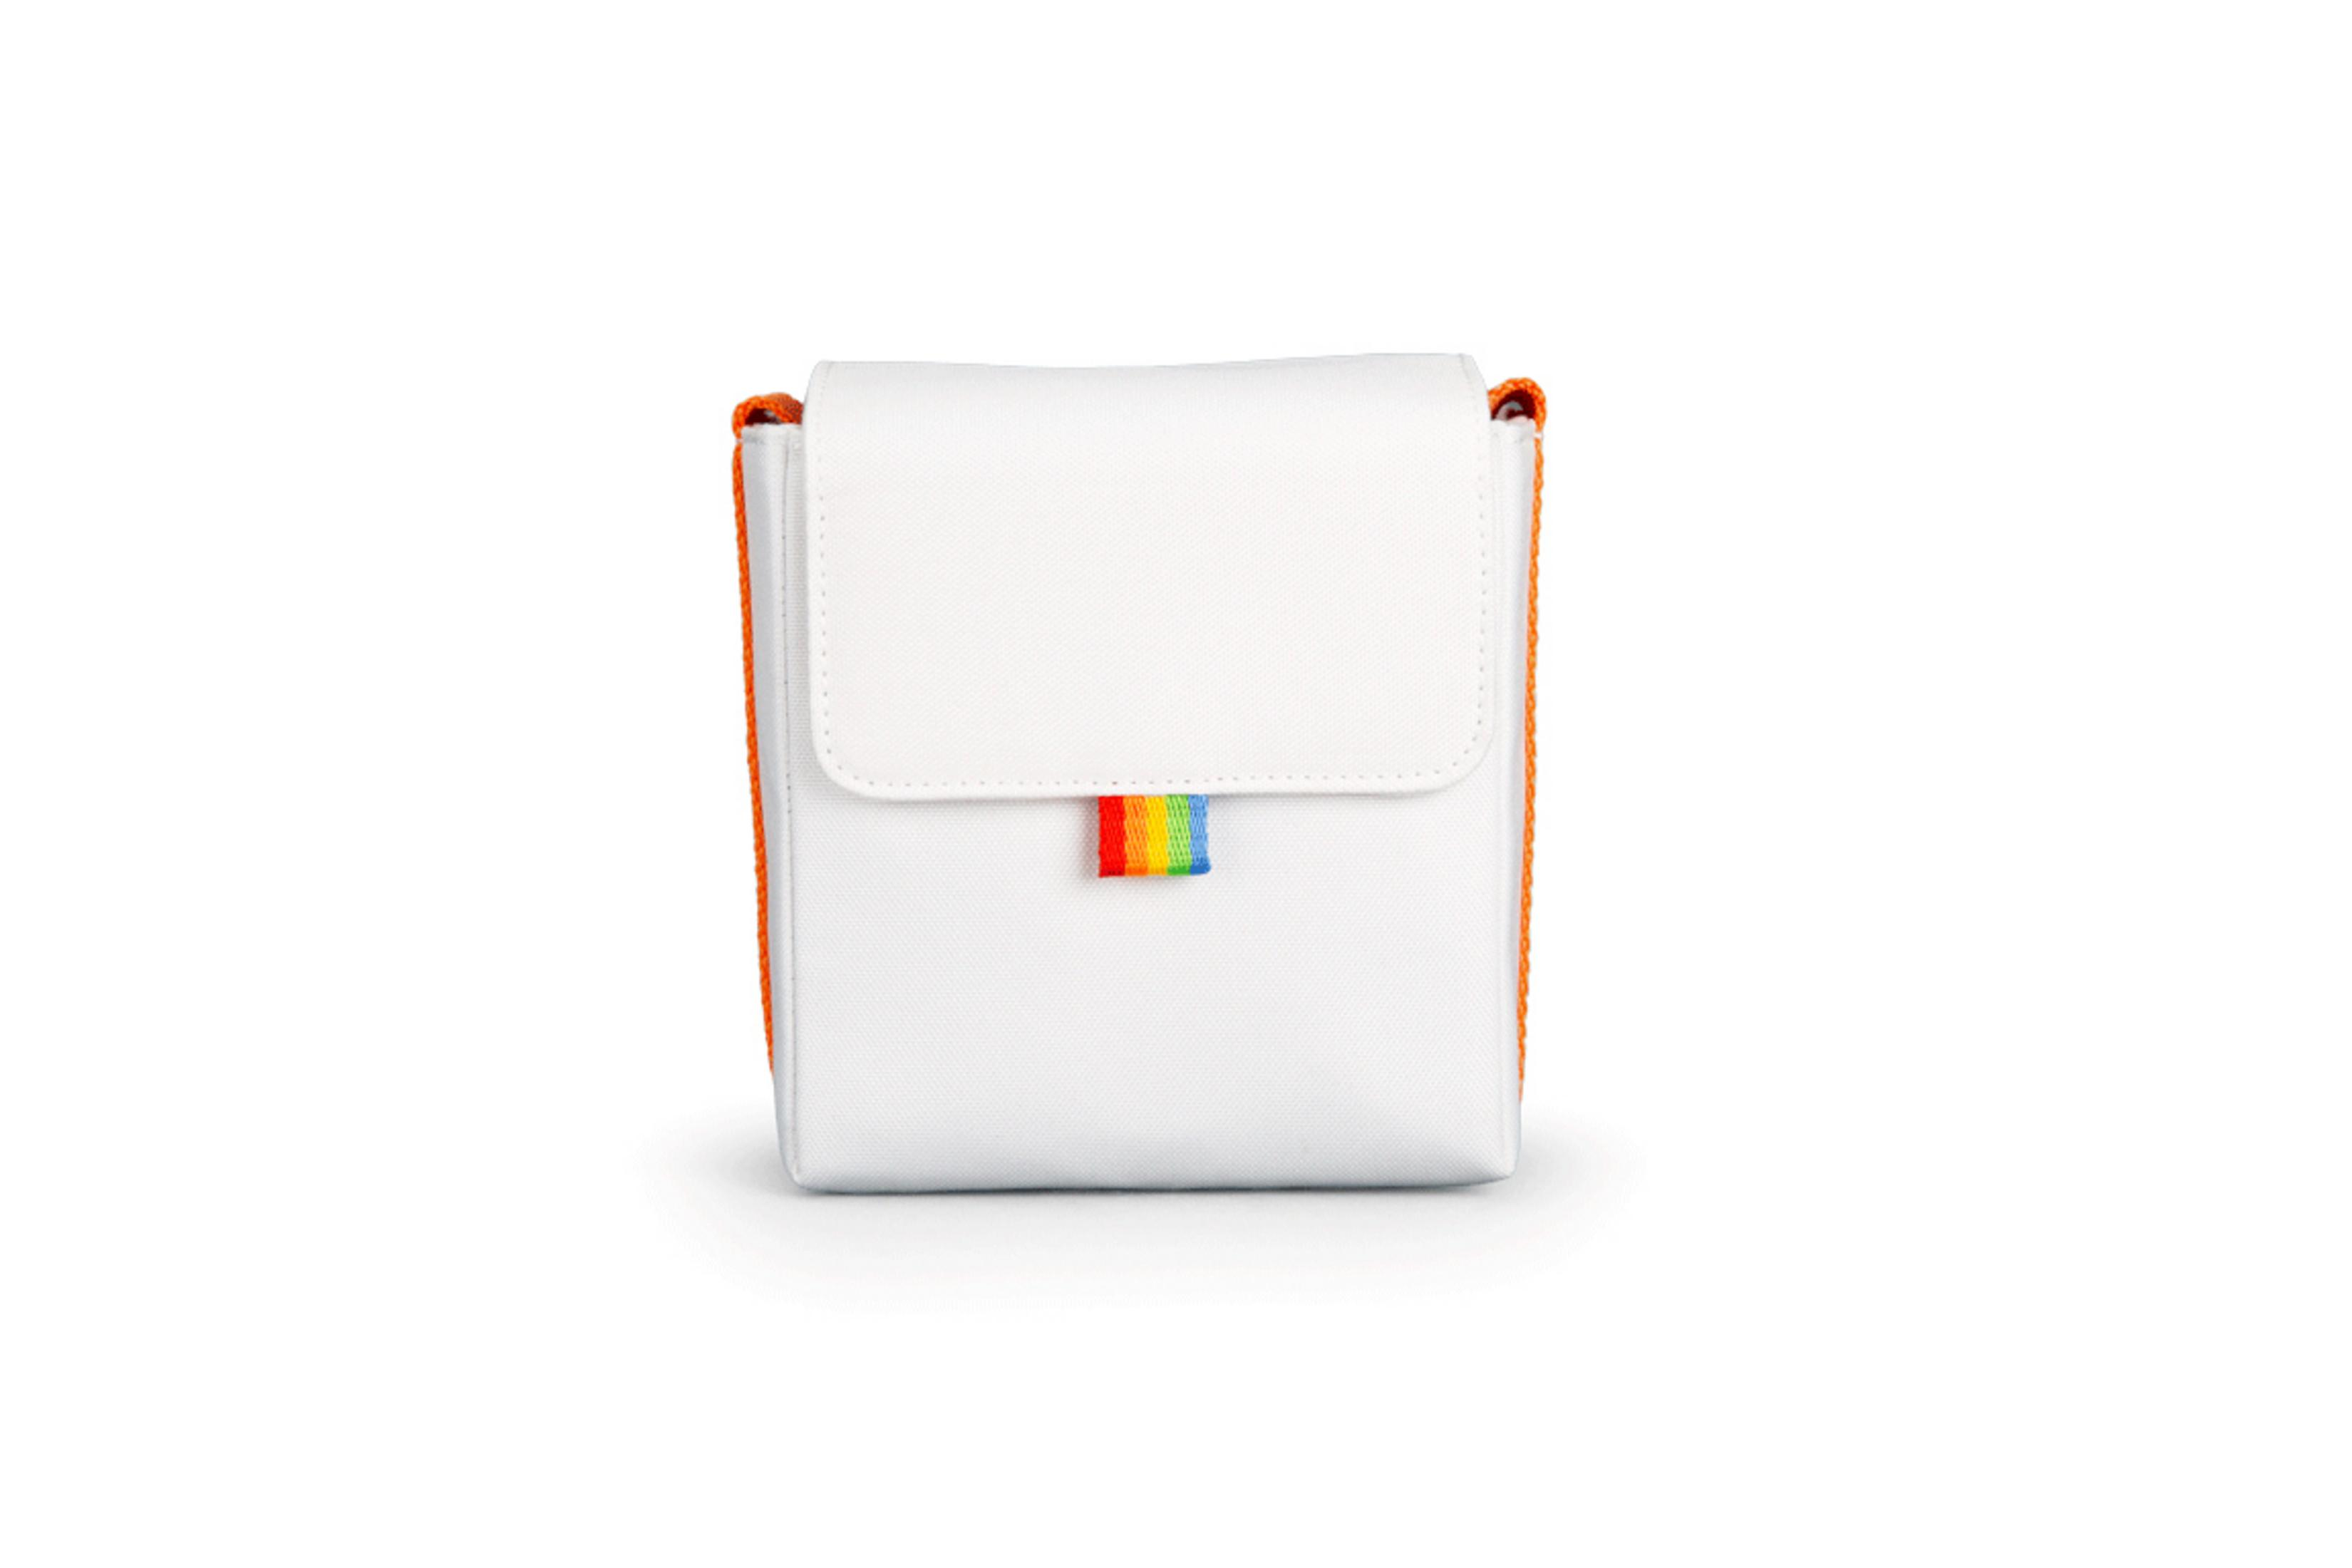 Kameratasche, Weiß/Orange & BAG 6101 ORANGE NOW POLAROID WHITE